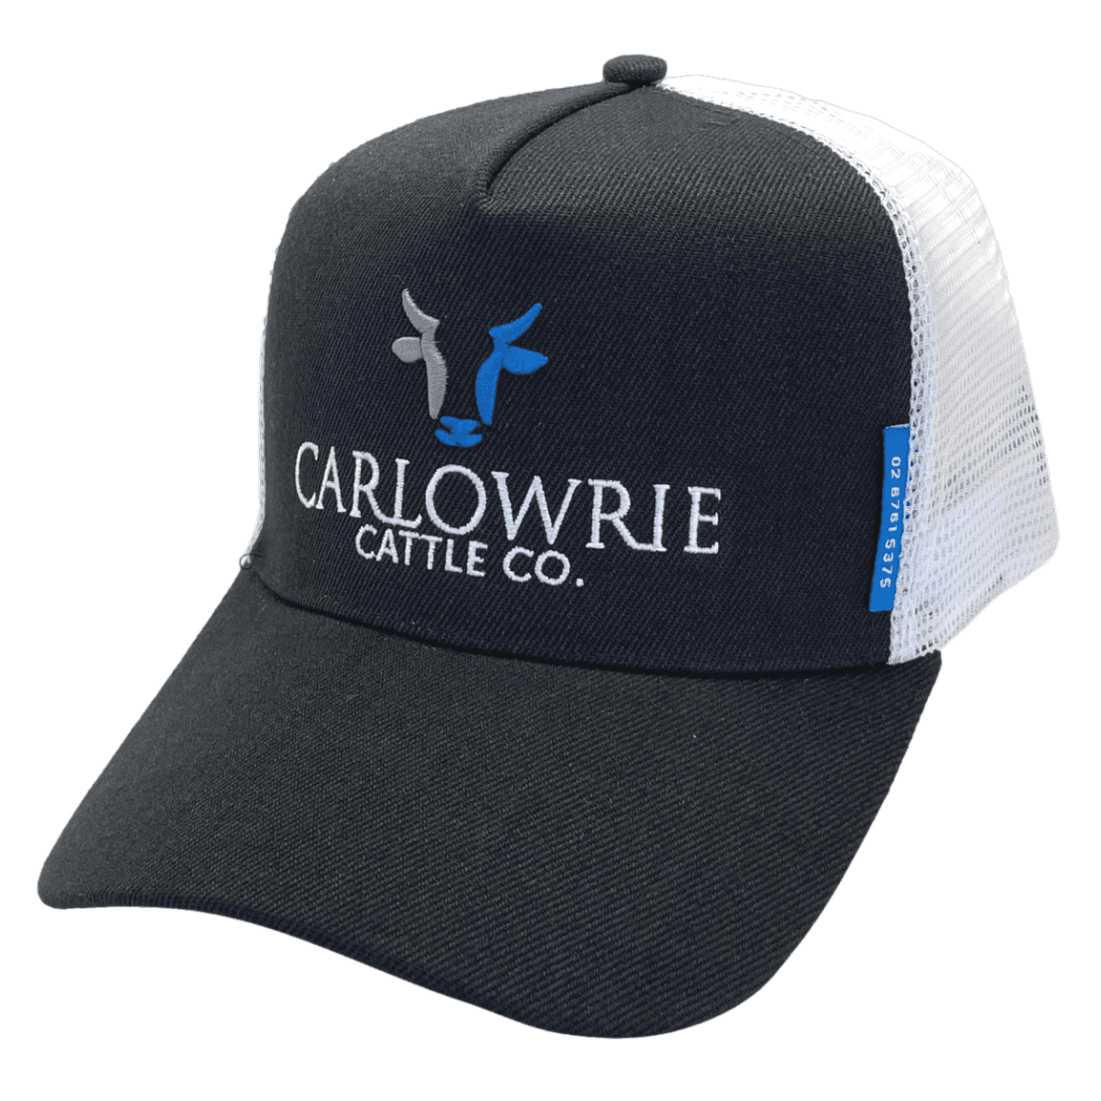 Carlowrie Cattle Co Tamworth NSW HP Midrange Aussie Trucker Hat with Australian Head Fit Crown Size